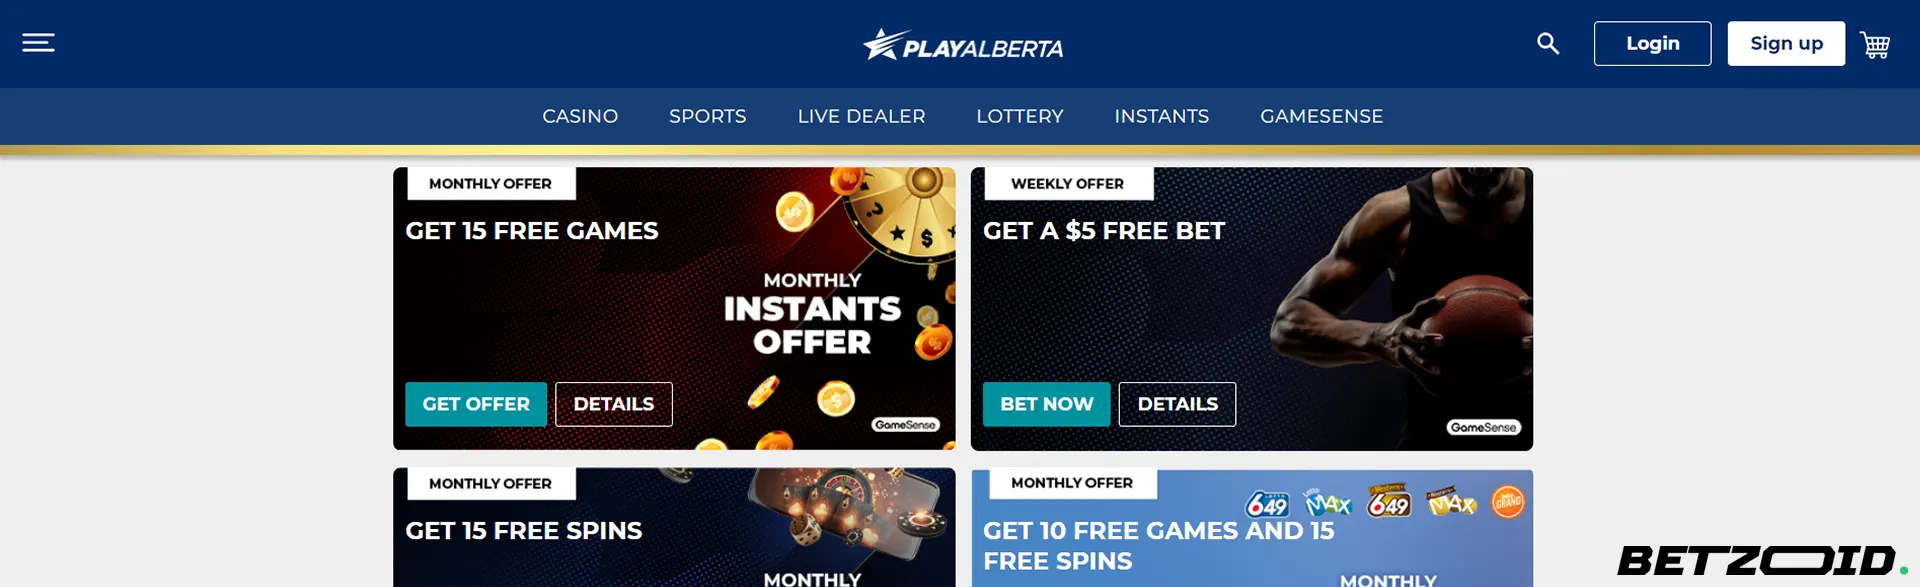 Play Alberta promo code no deposit offers.